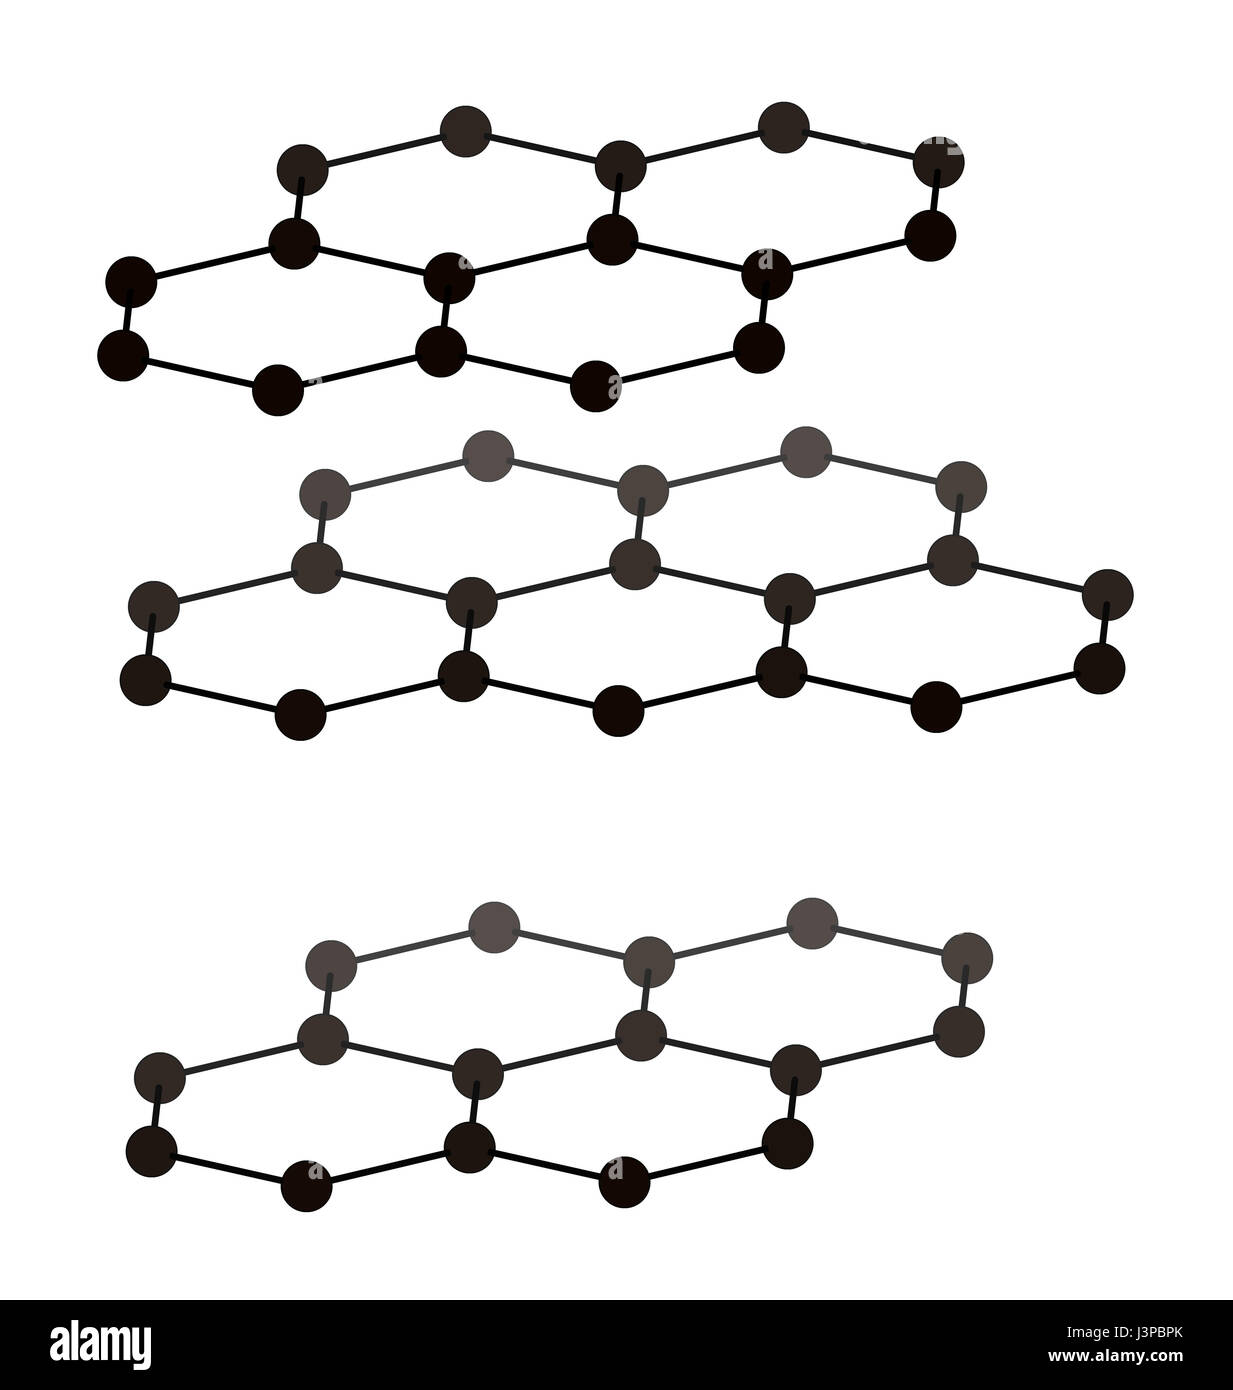 Diagram Of Graphite Structure